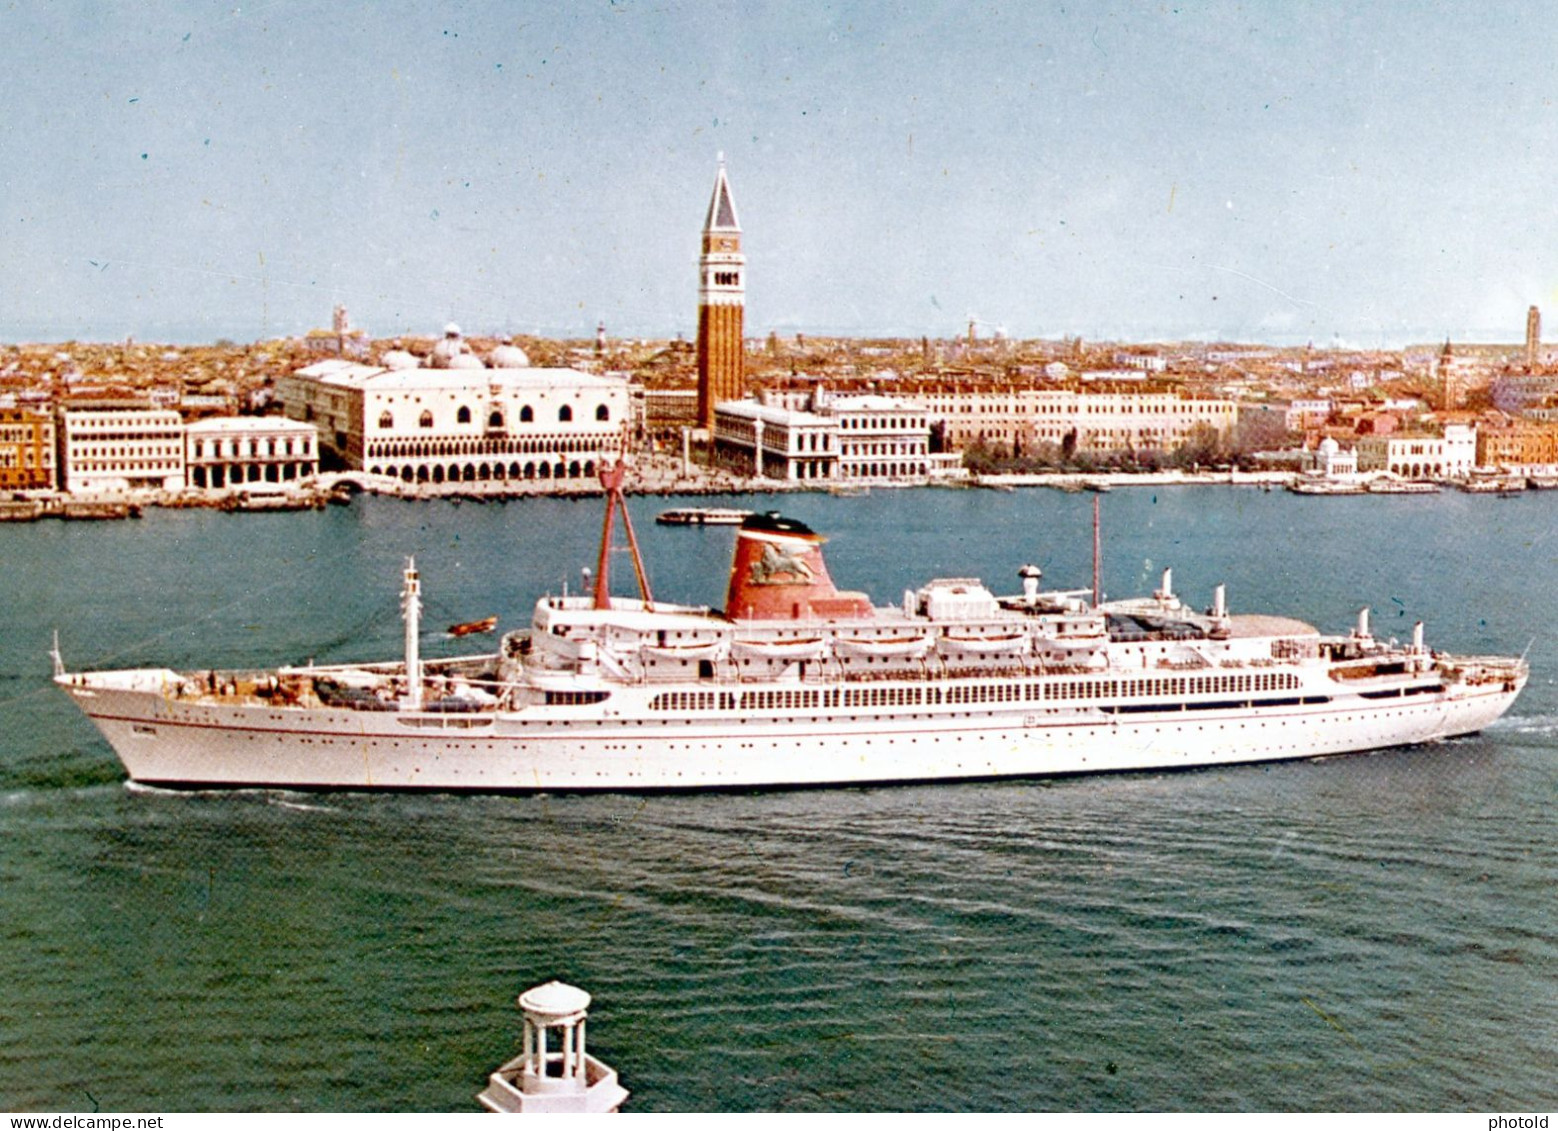 60s SS AUSONIA SHIP LINER PAQUEBOT VENICE ITALIA ITALY  35mm AMATEUR DIAPOSITIVE SLIDE Not PHOTO No FOTO NB3888 - Diapositives